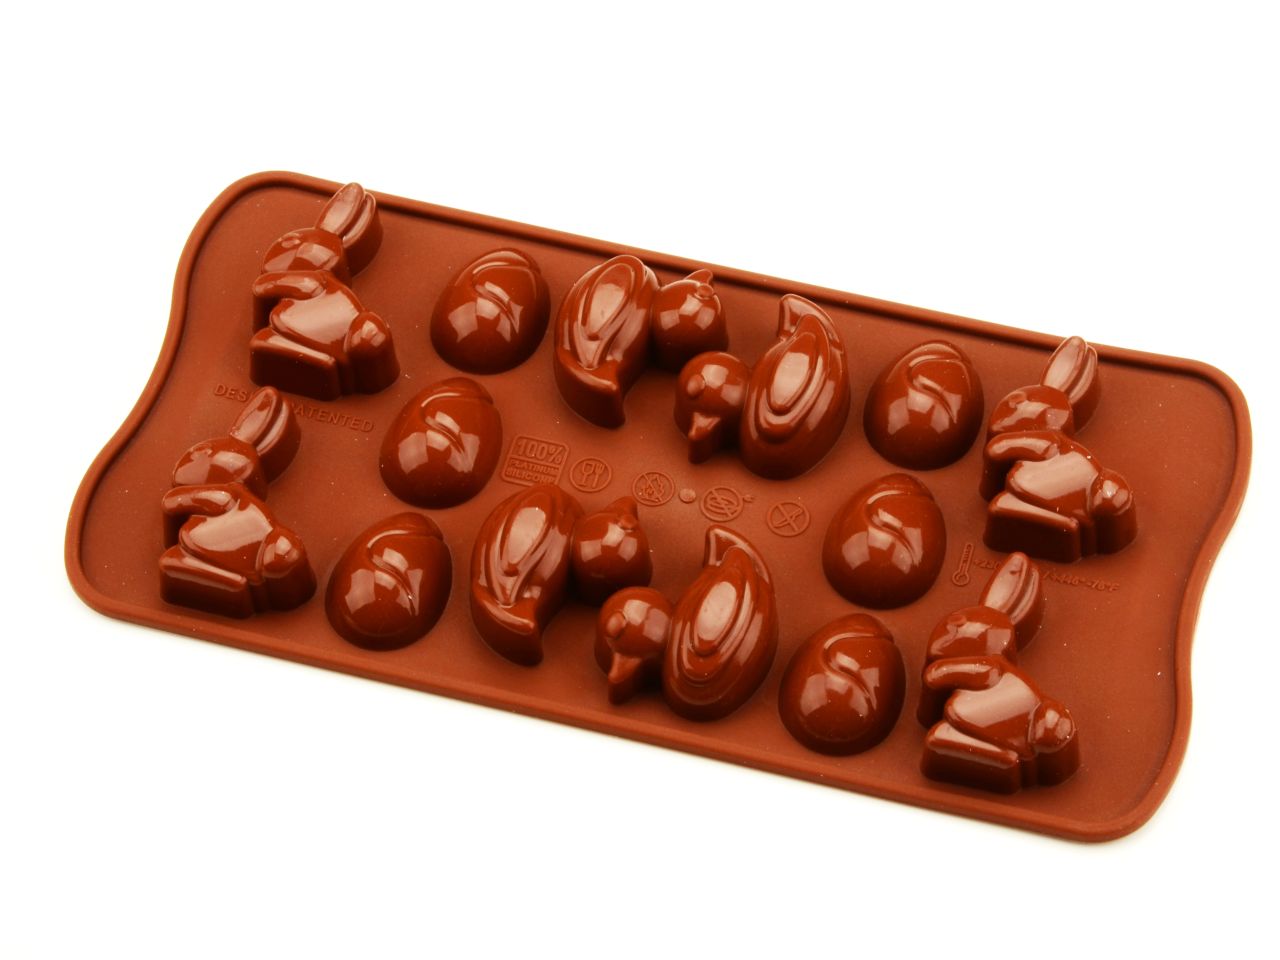 Silikomart Schokoladenform- Ostern